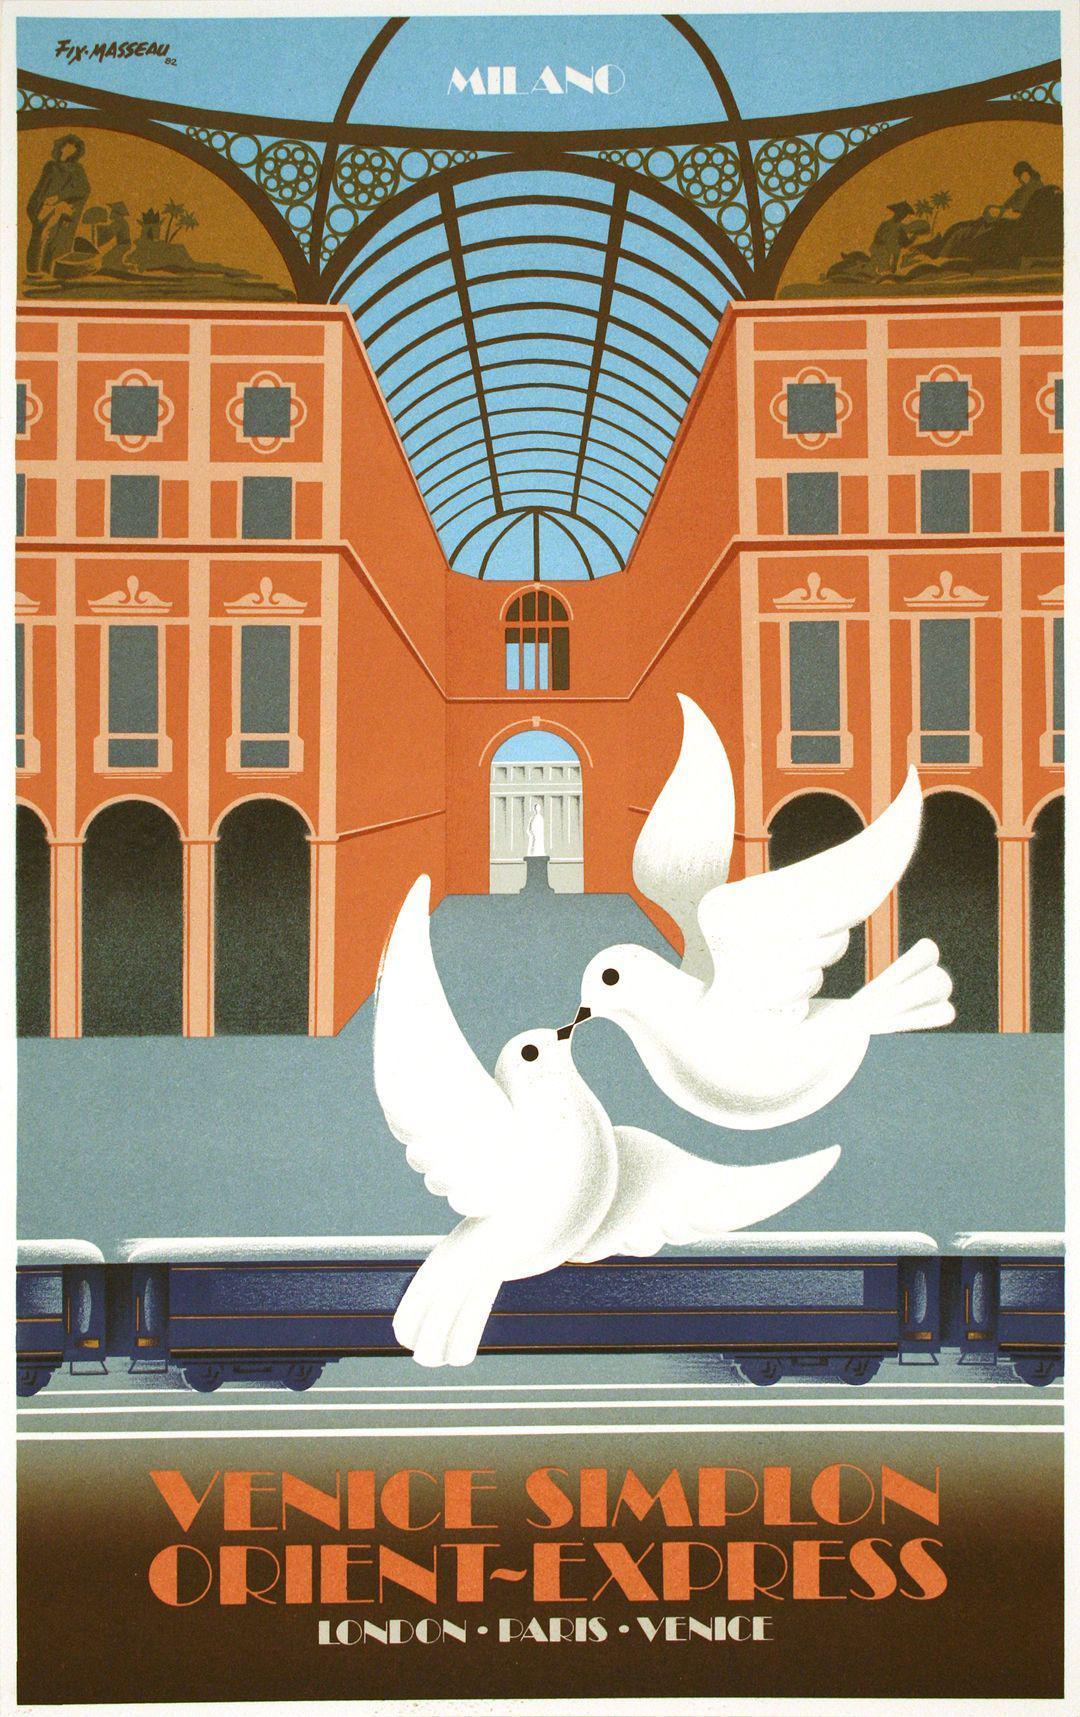 Original Vintage Poster for Venice Simplon Orient Express by Fix Masseau 1982 - Milano